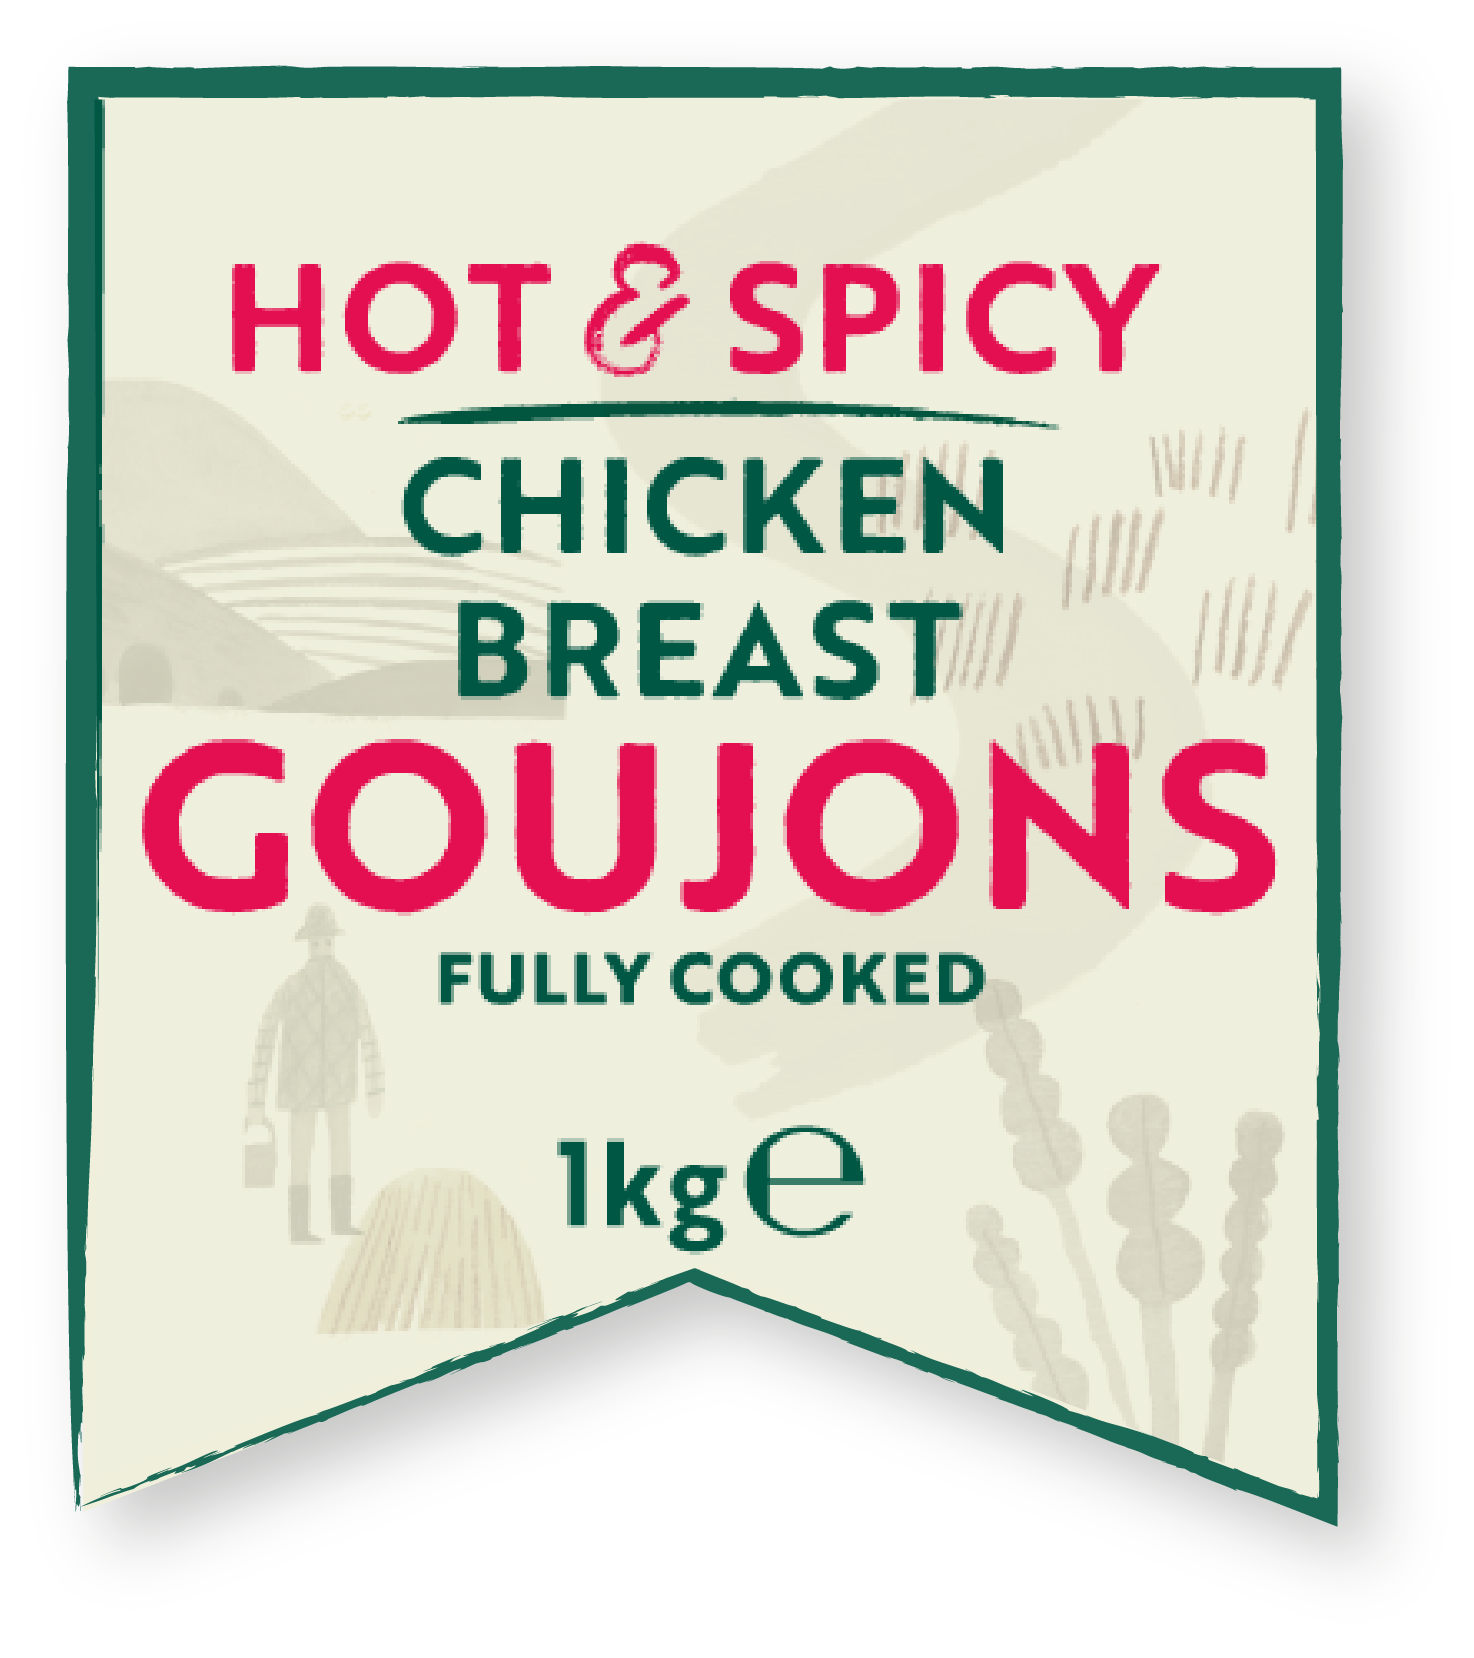 Hot & spicy chicken breast goujons